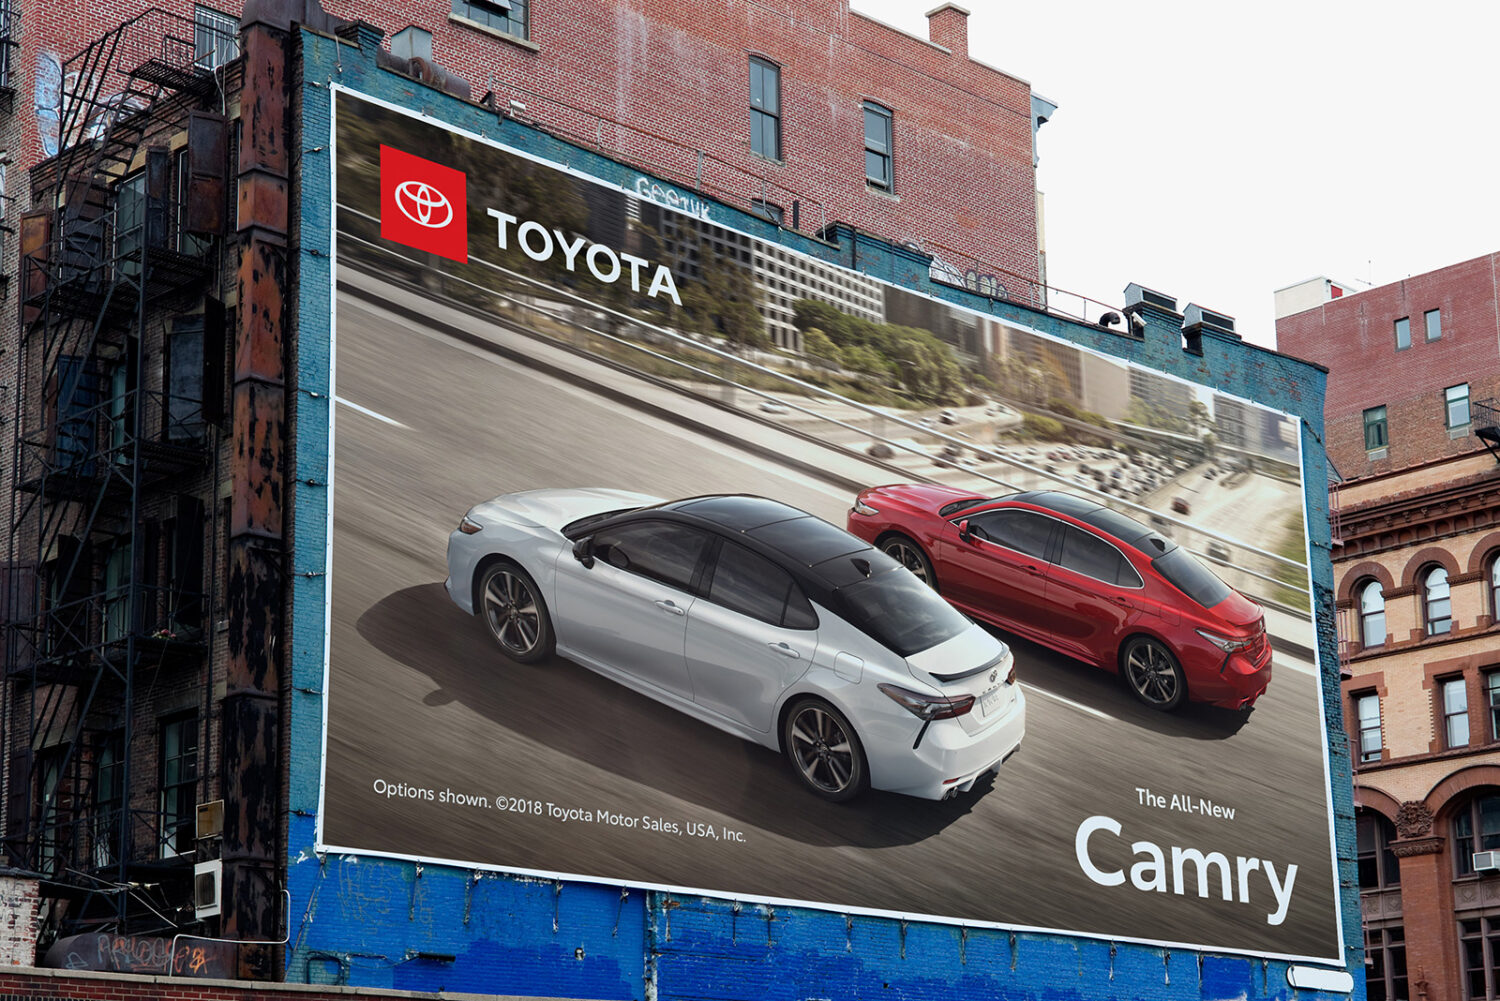 Toyota – Advertising Billboard, Quelle: Toyota USA